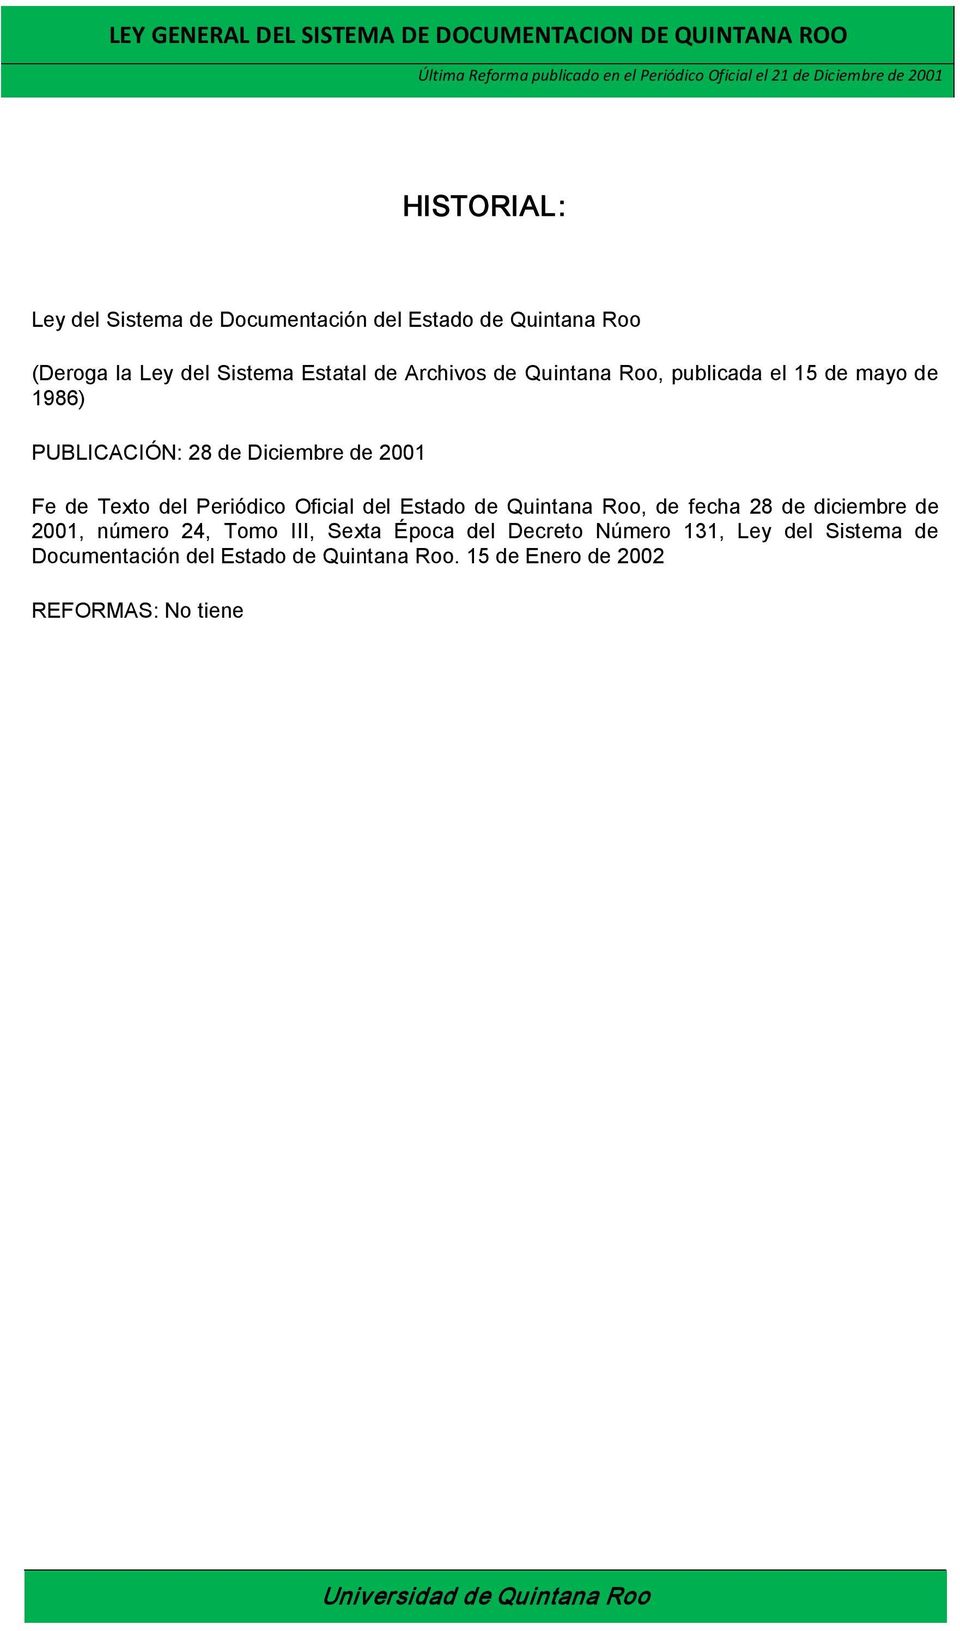 Periódico Oficial del Estado de Quintana Roo, de fecha 28 de diciembre de 2001, número 24, Tomo III, Sexta Época